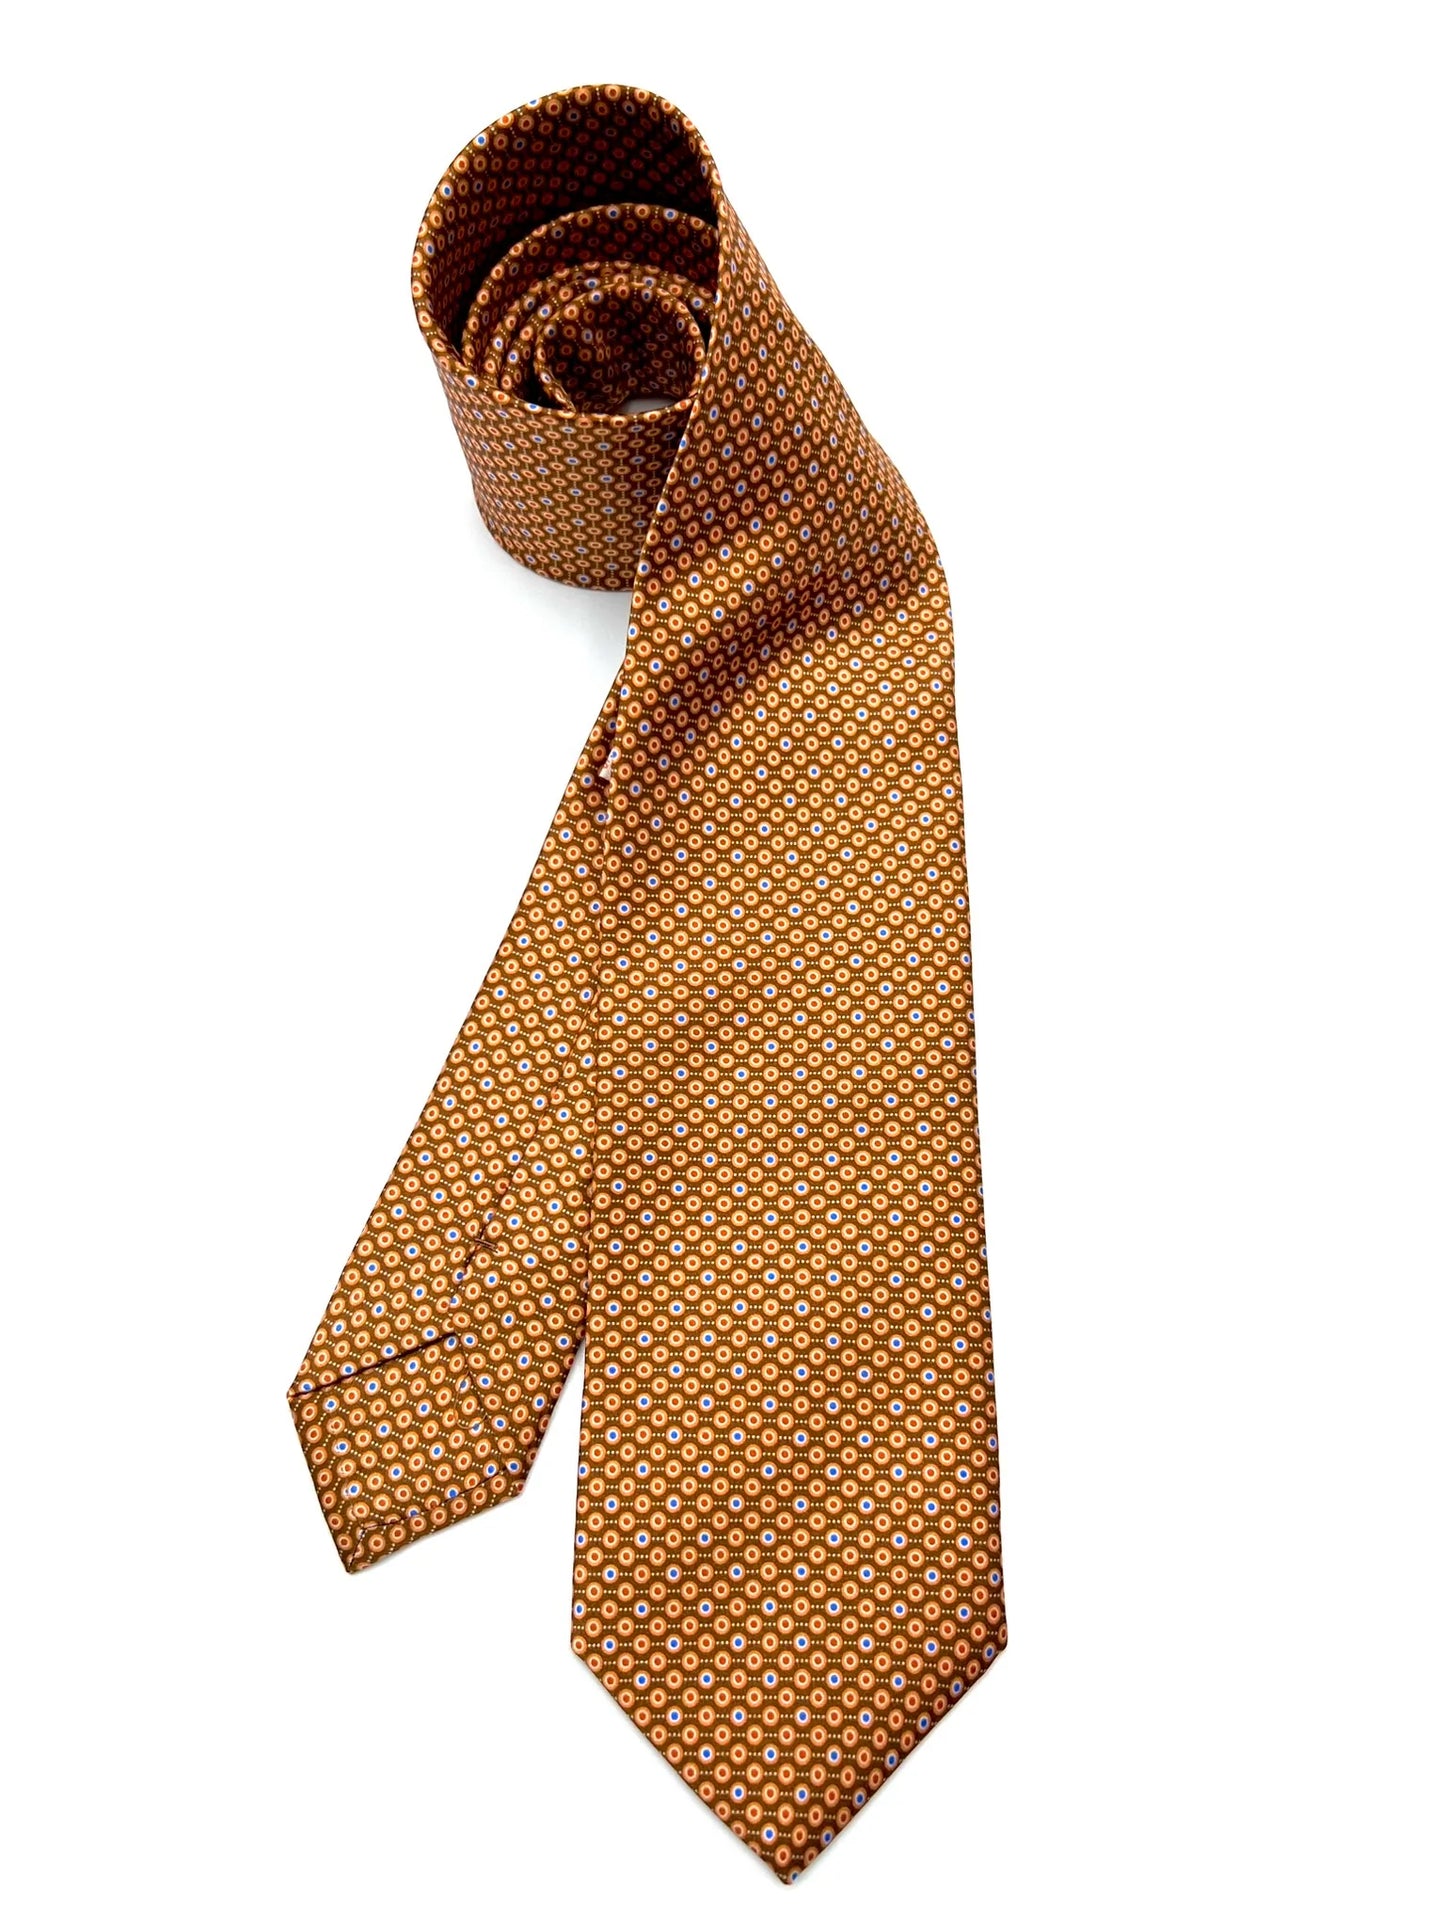 Orange Micro Patterned Silk Tie Pure silk three fold tie. Handmade by our Italian tailors. 100% Pure silk.Our ties standard  width is 8 cm (3.15 inch),standard  length is 150 cm (59 inch).| Sartoria Dei Duchi 